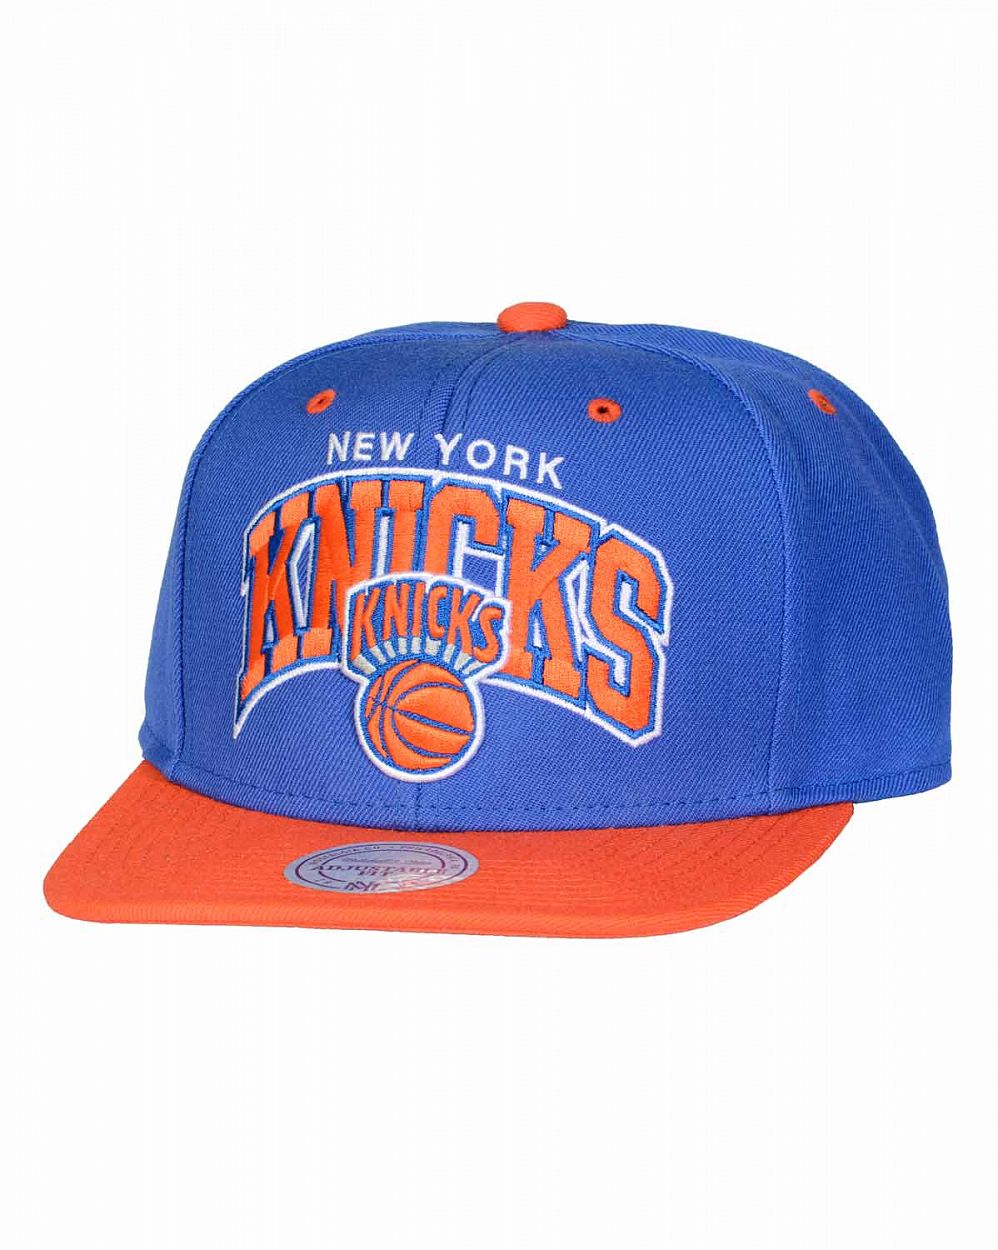 Бейсболка с прямым козырьком Mitchell and Ness DOUBLE ARCH New York Knicks Blue отзывы